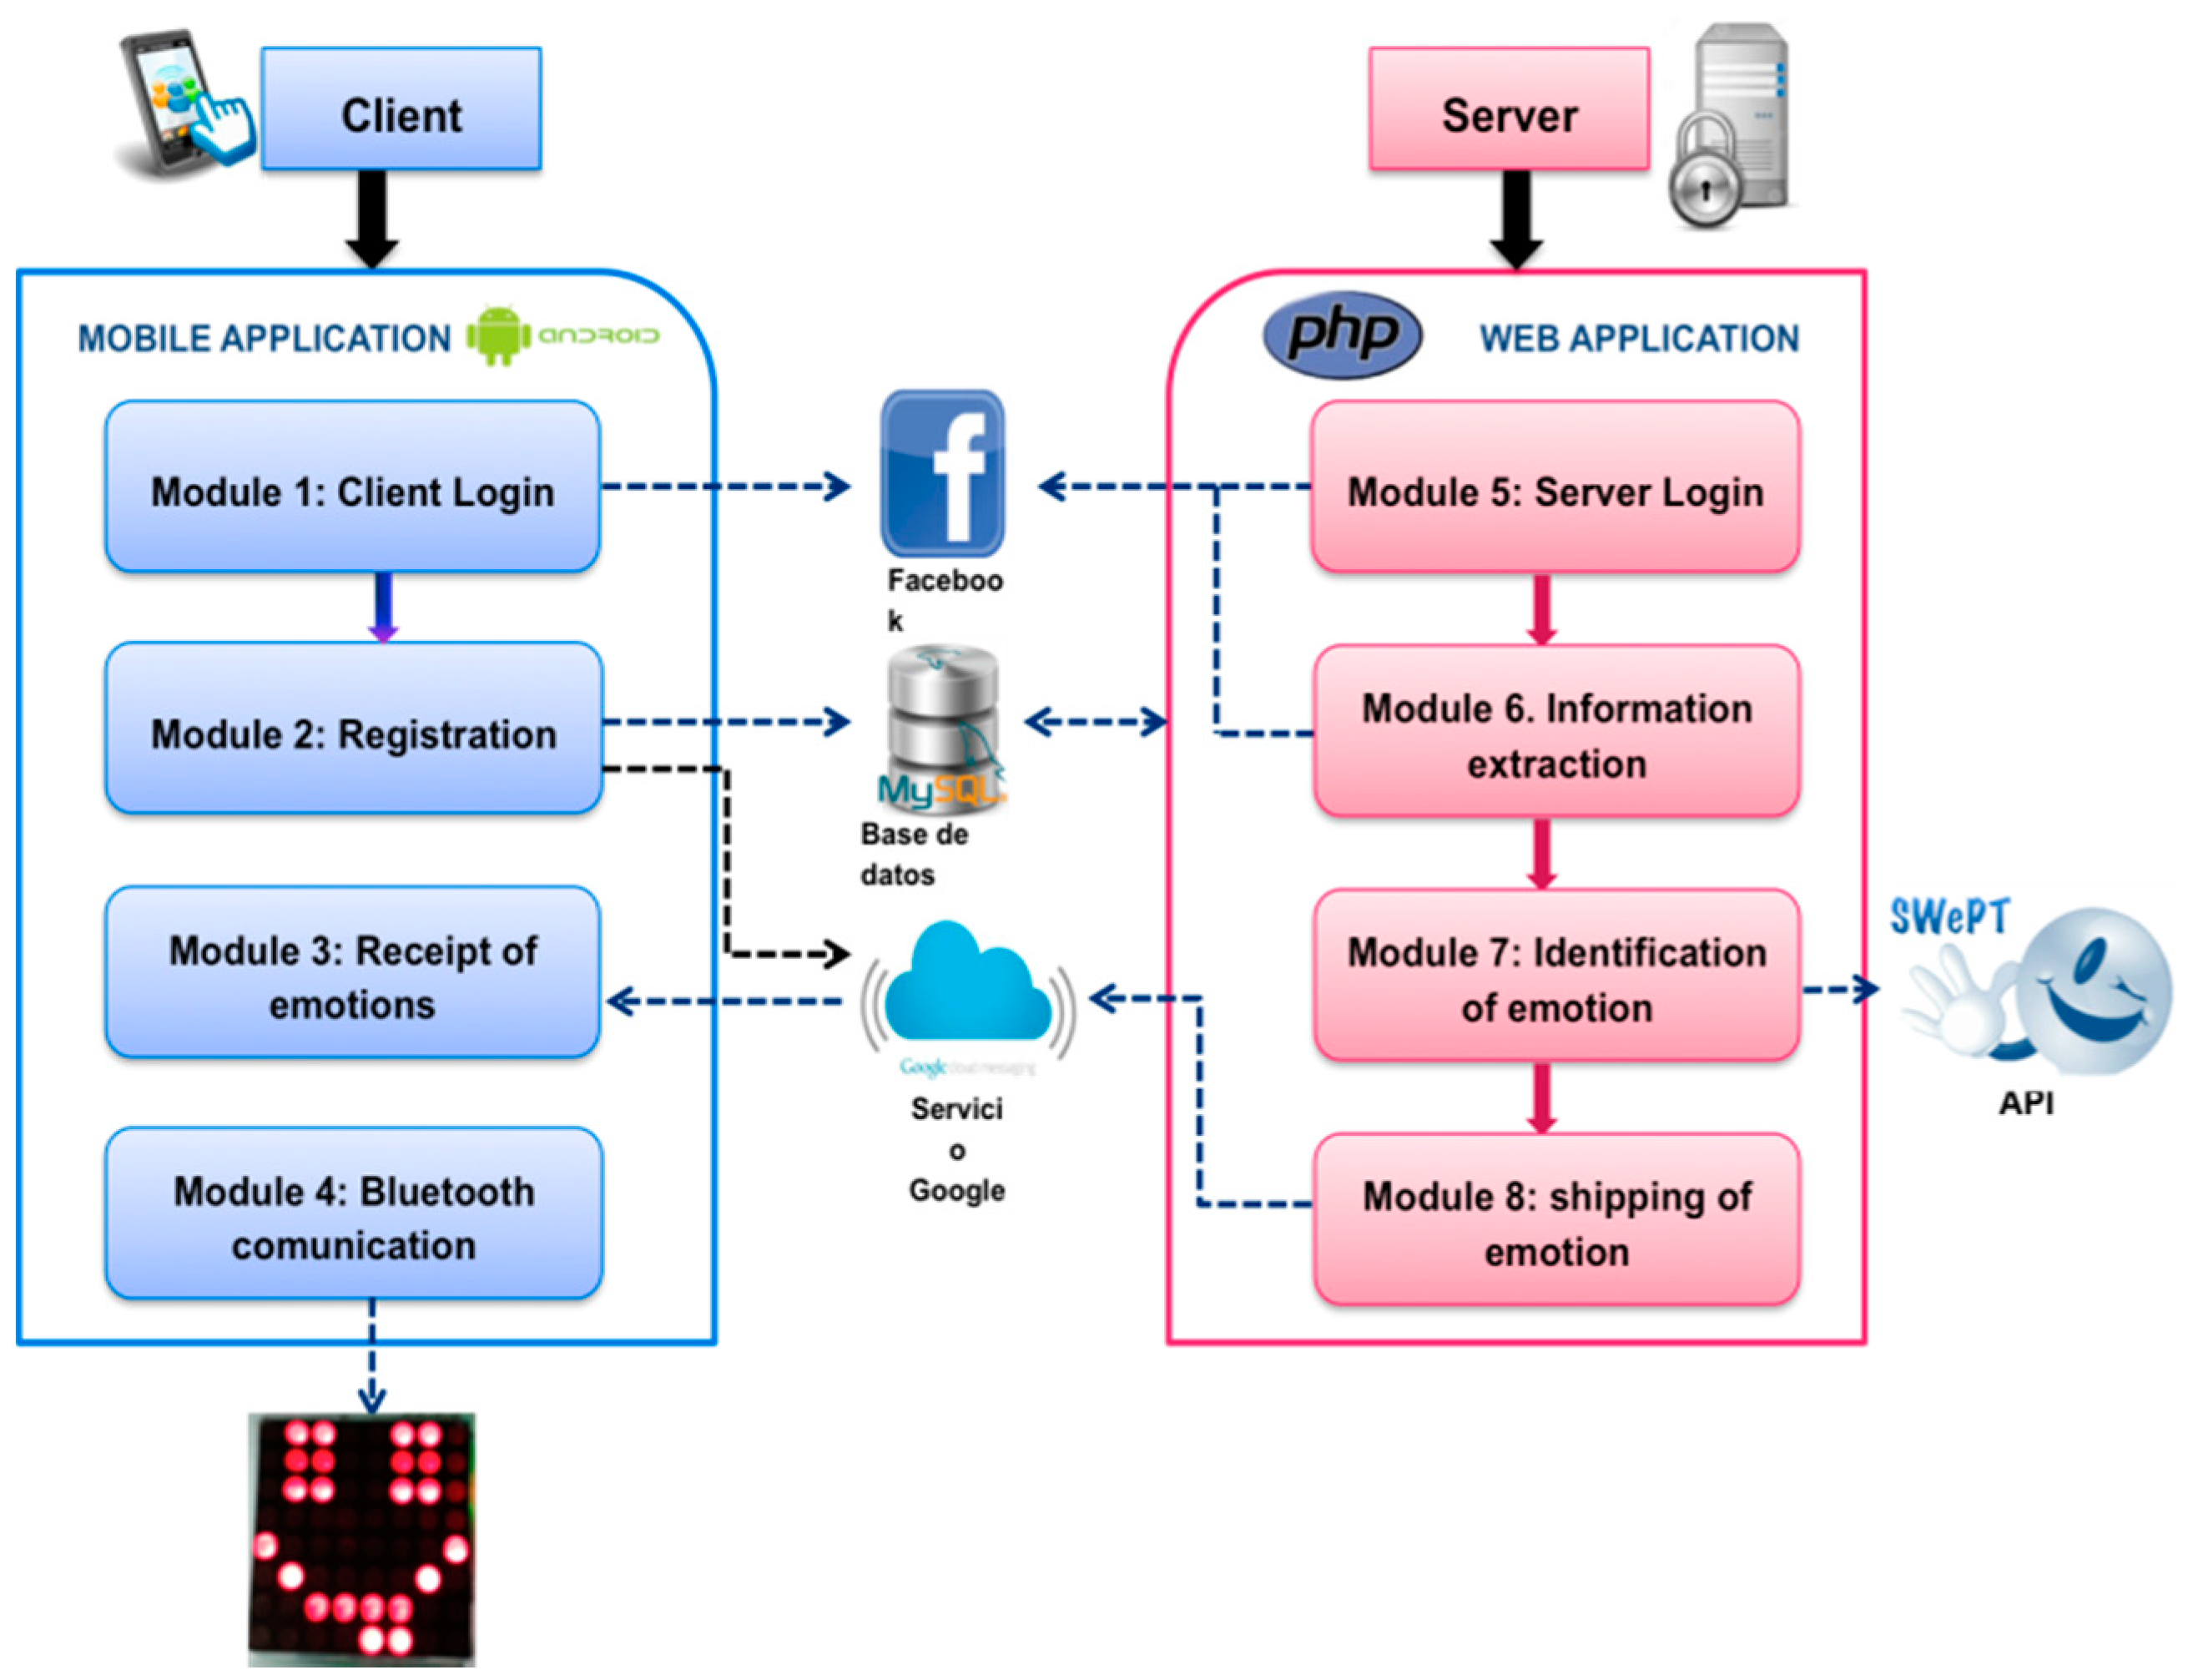 Pdf client. API клиент сервер. Client Server Architecture. Client Server Architecture diagram. Client Server application.